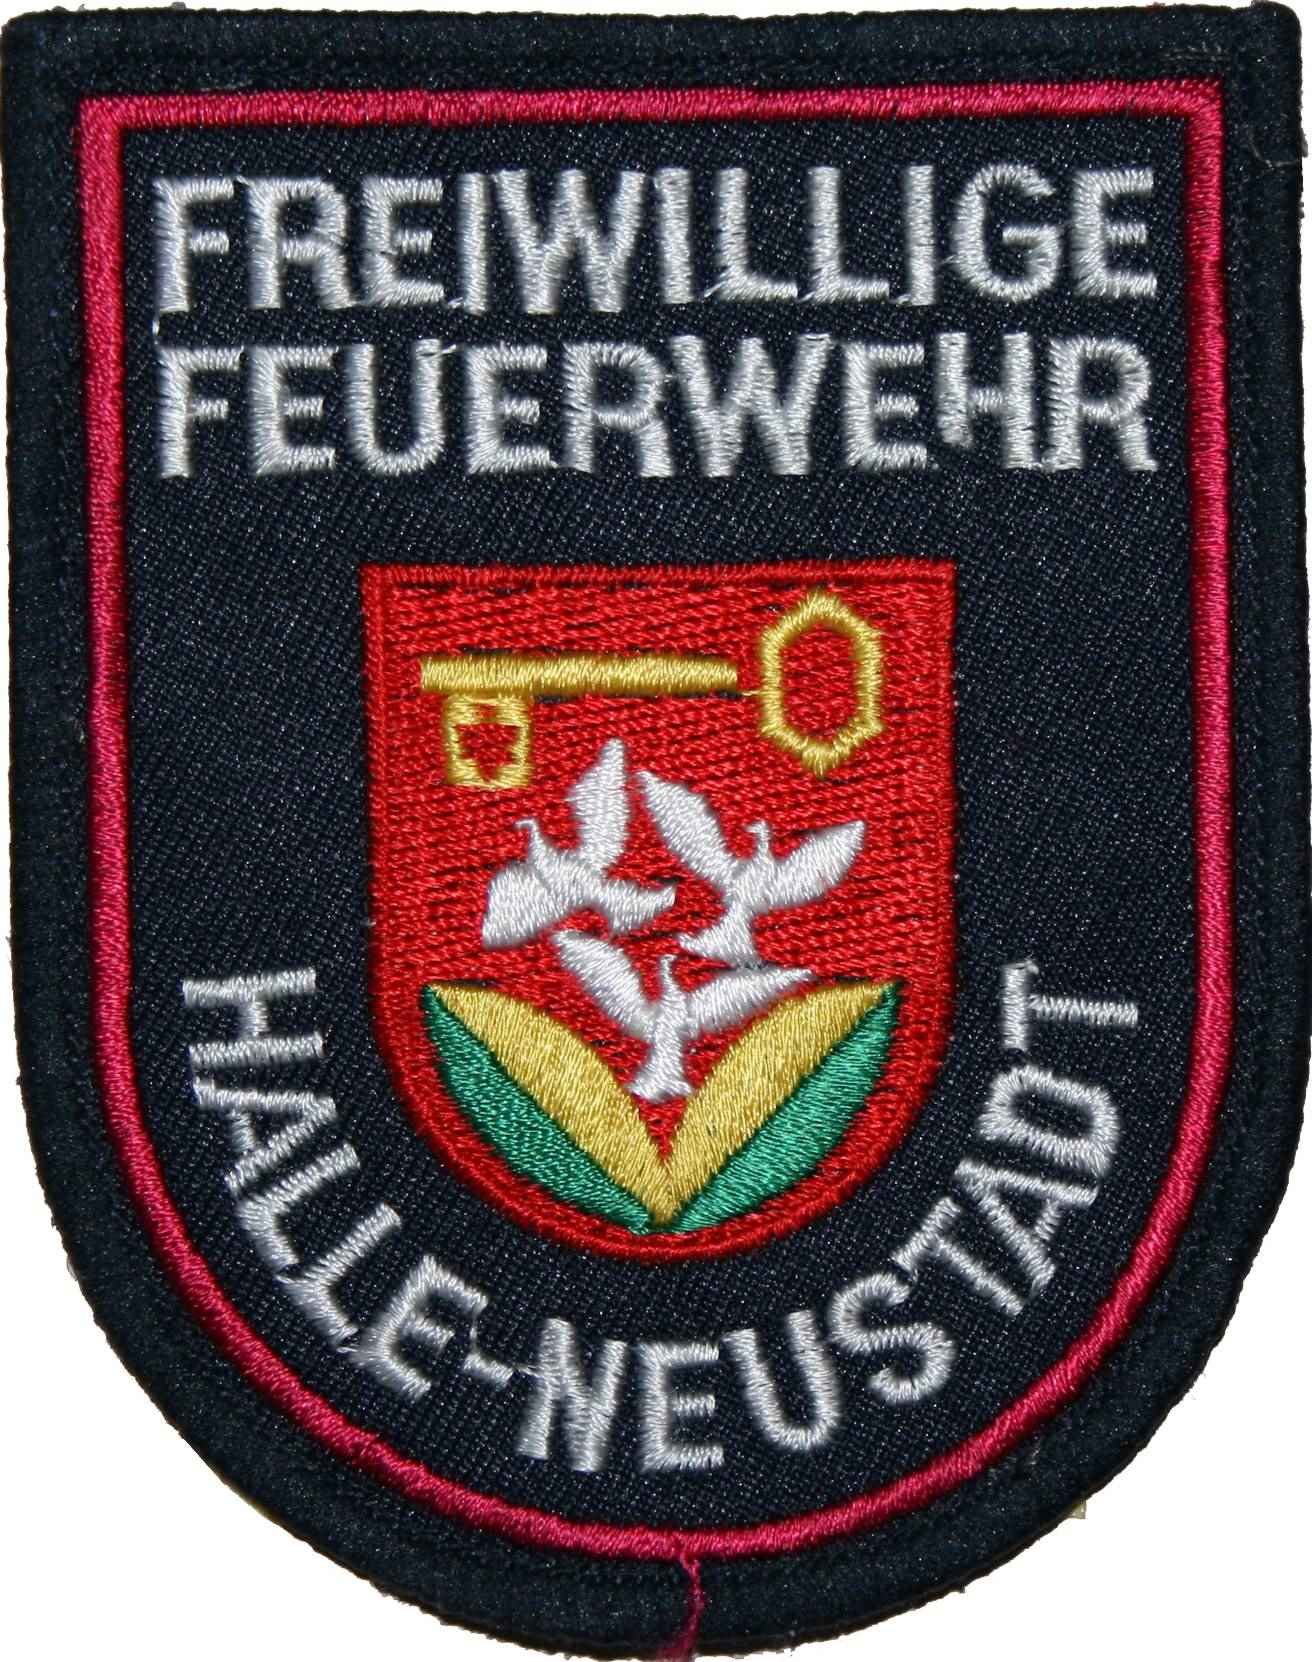 Halle-Neustadt